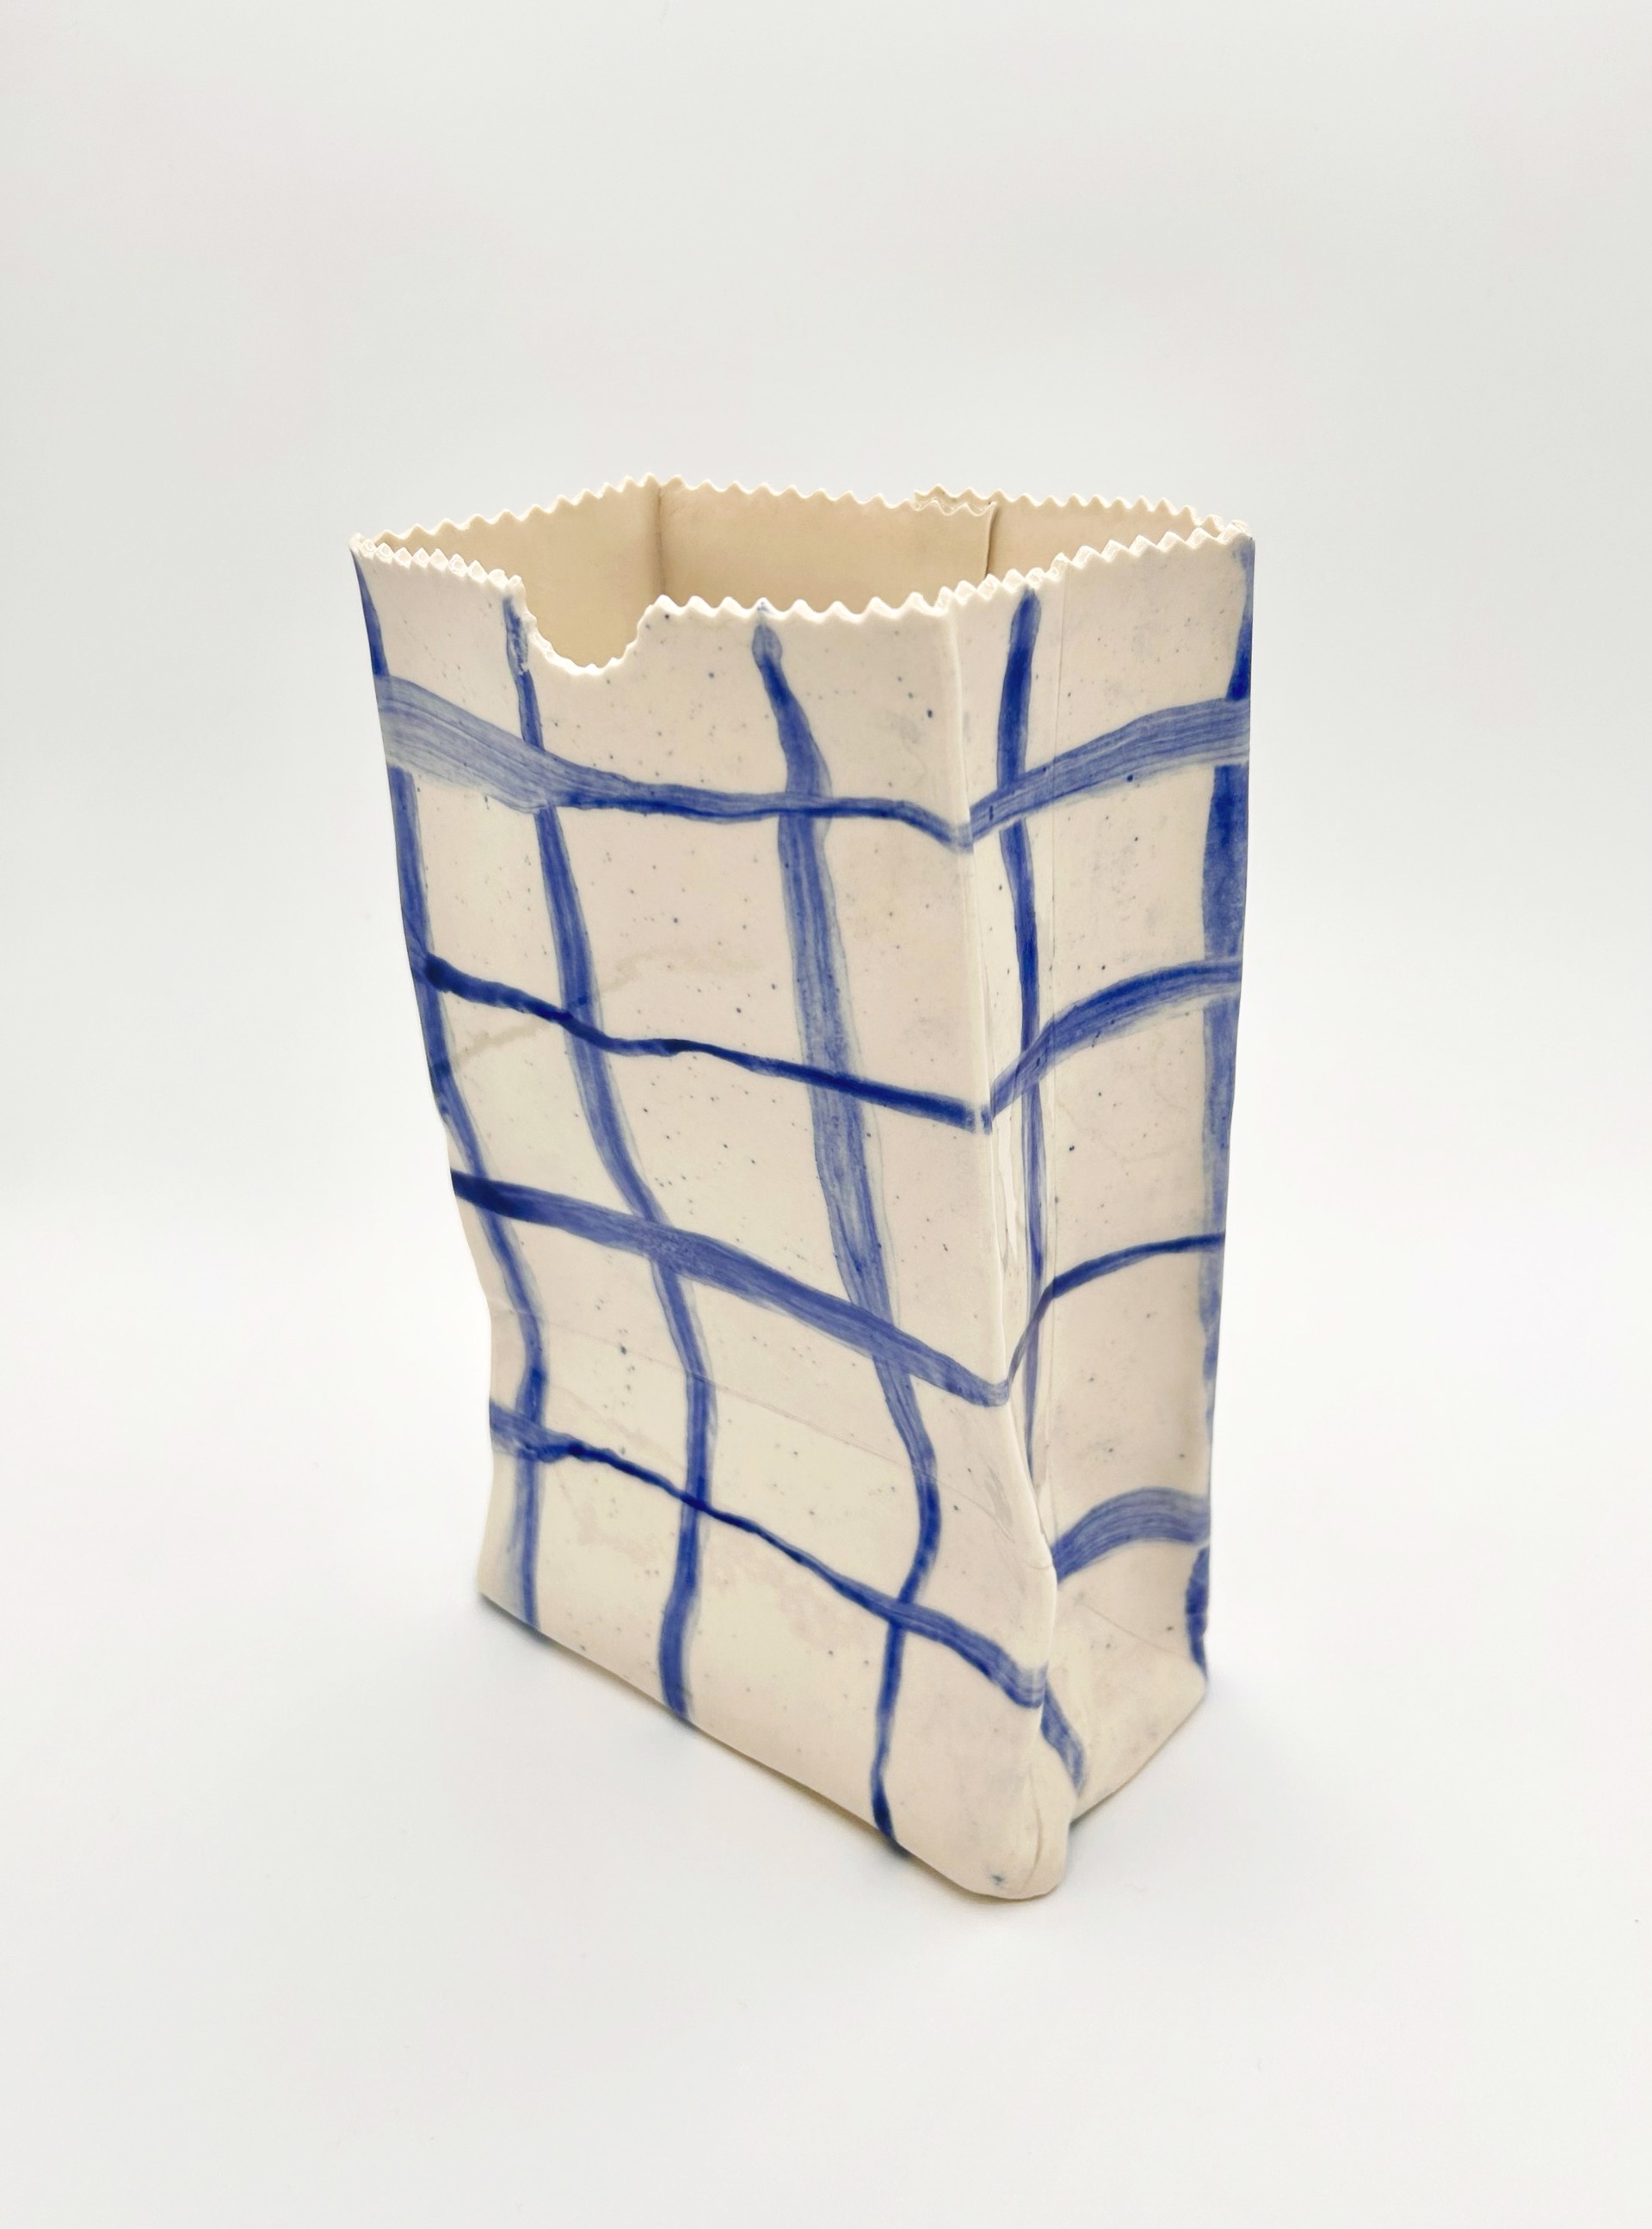 Blue Grid Paper Bag by Chandra Beadleston